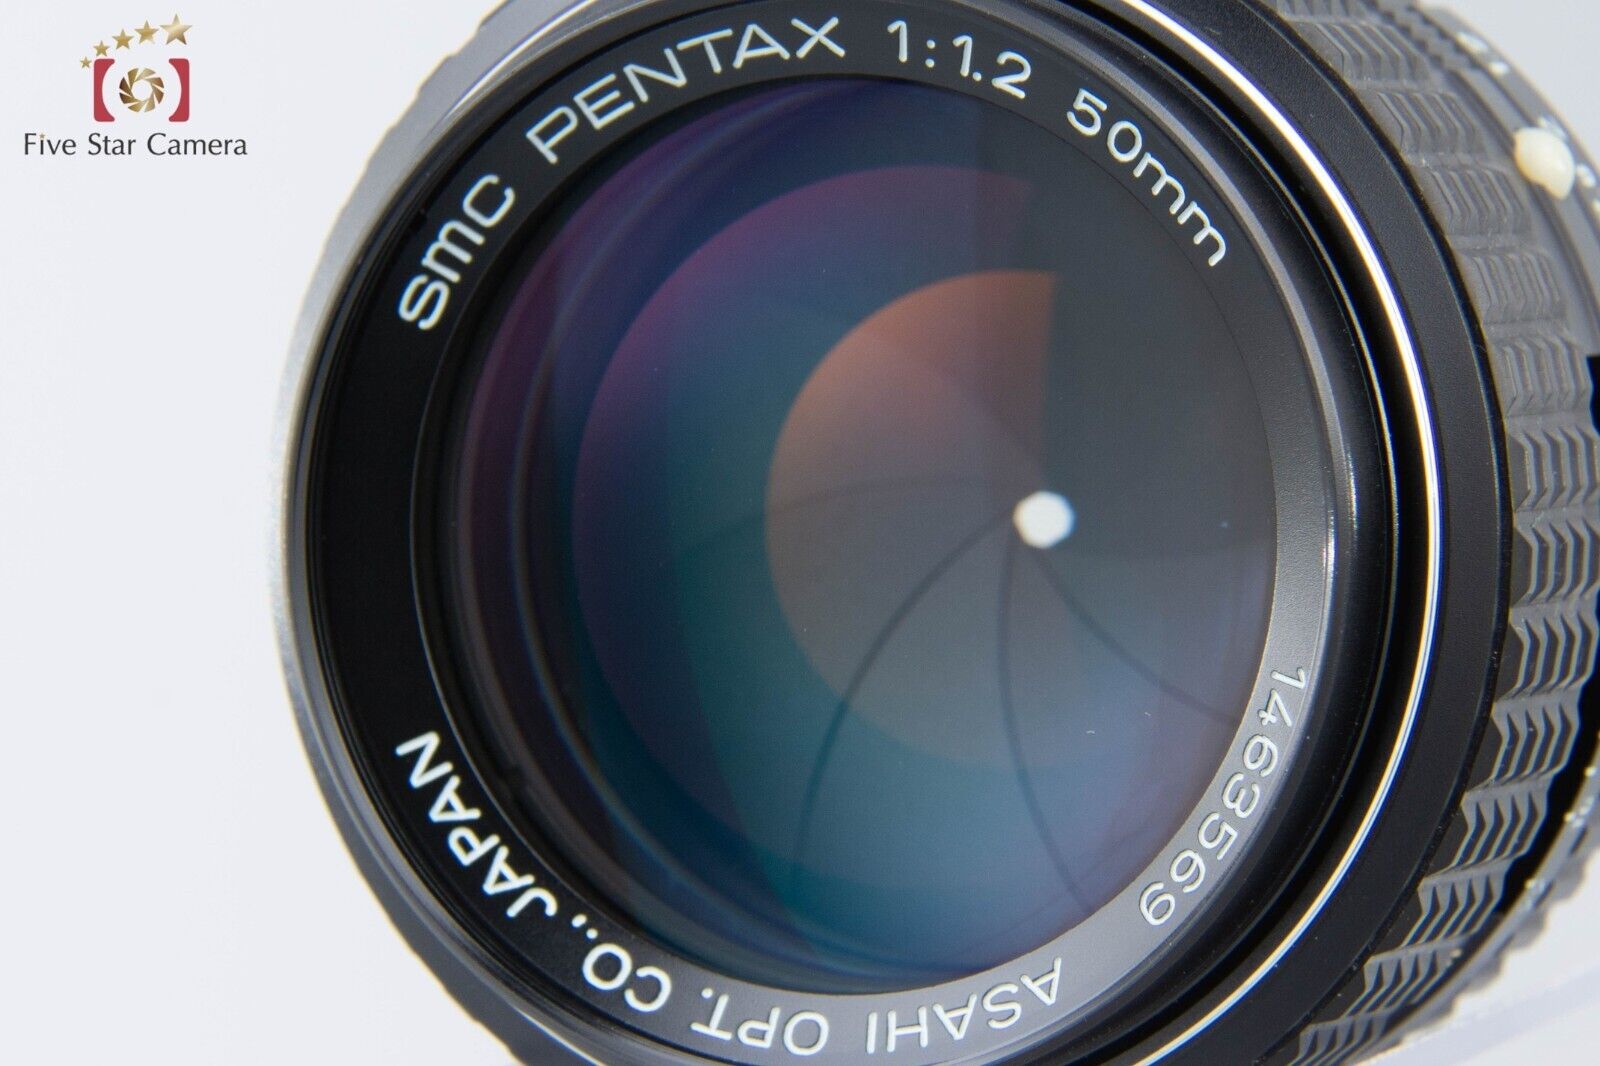 PENTAX SMC 50mm f/1.2 K Mount Lens